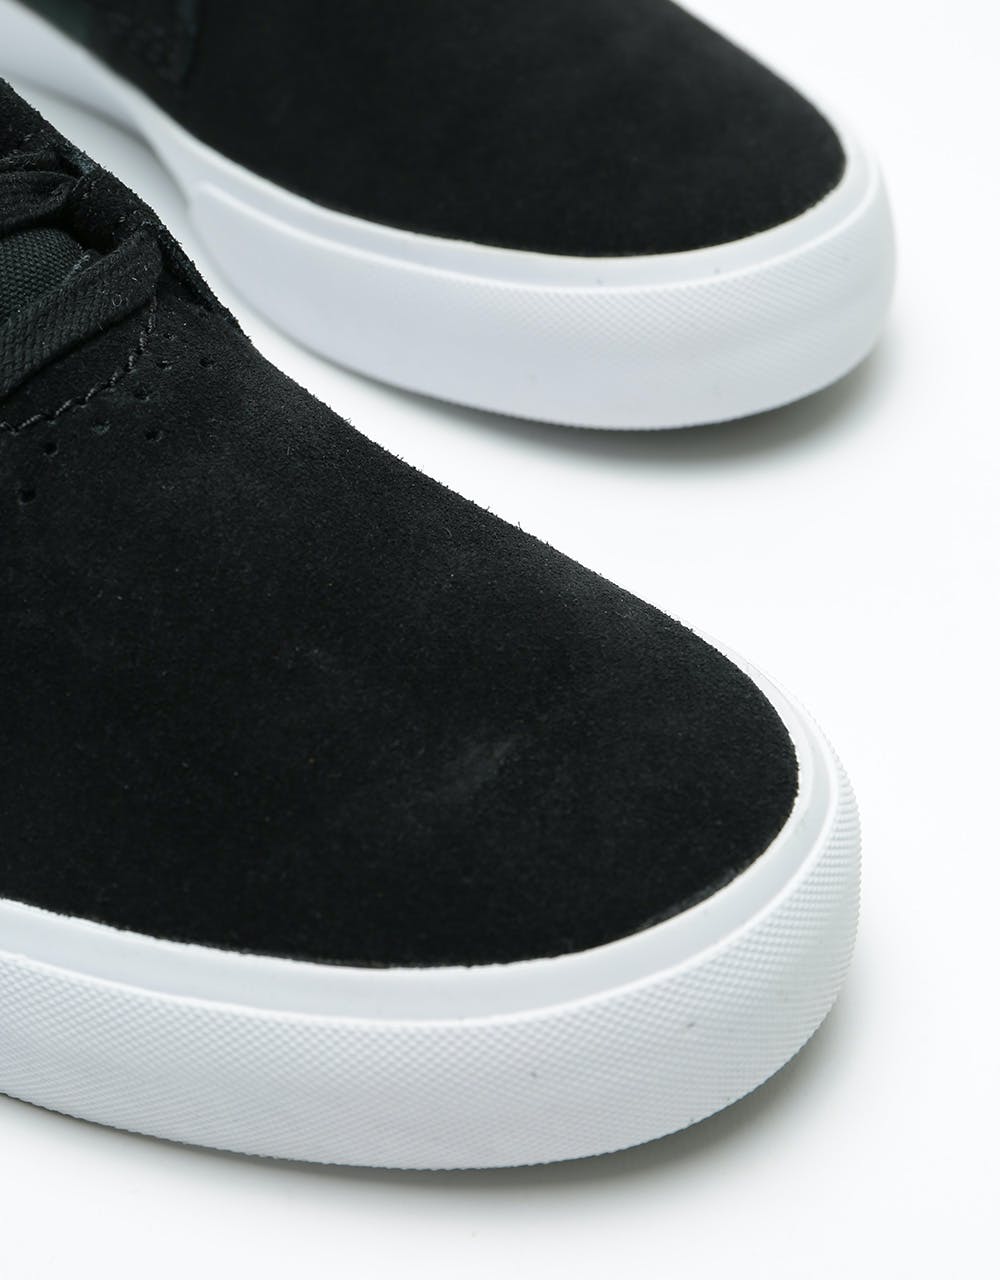 Nike SB Shane Skate Shoes - Black/White-Black